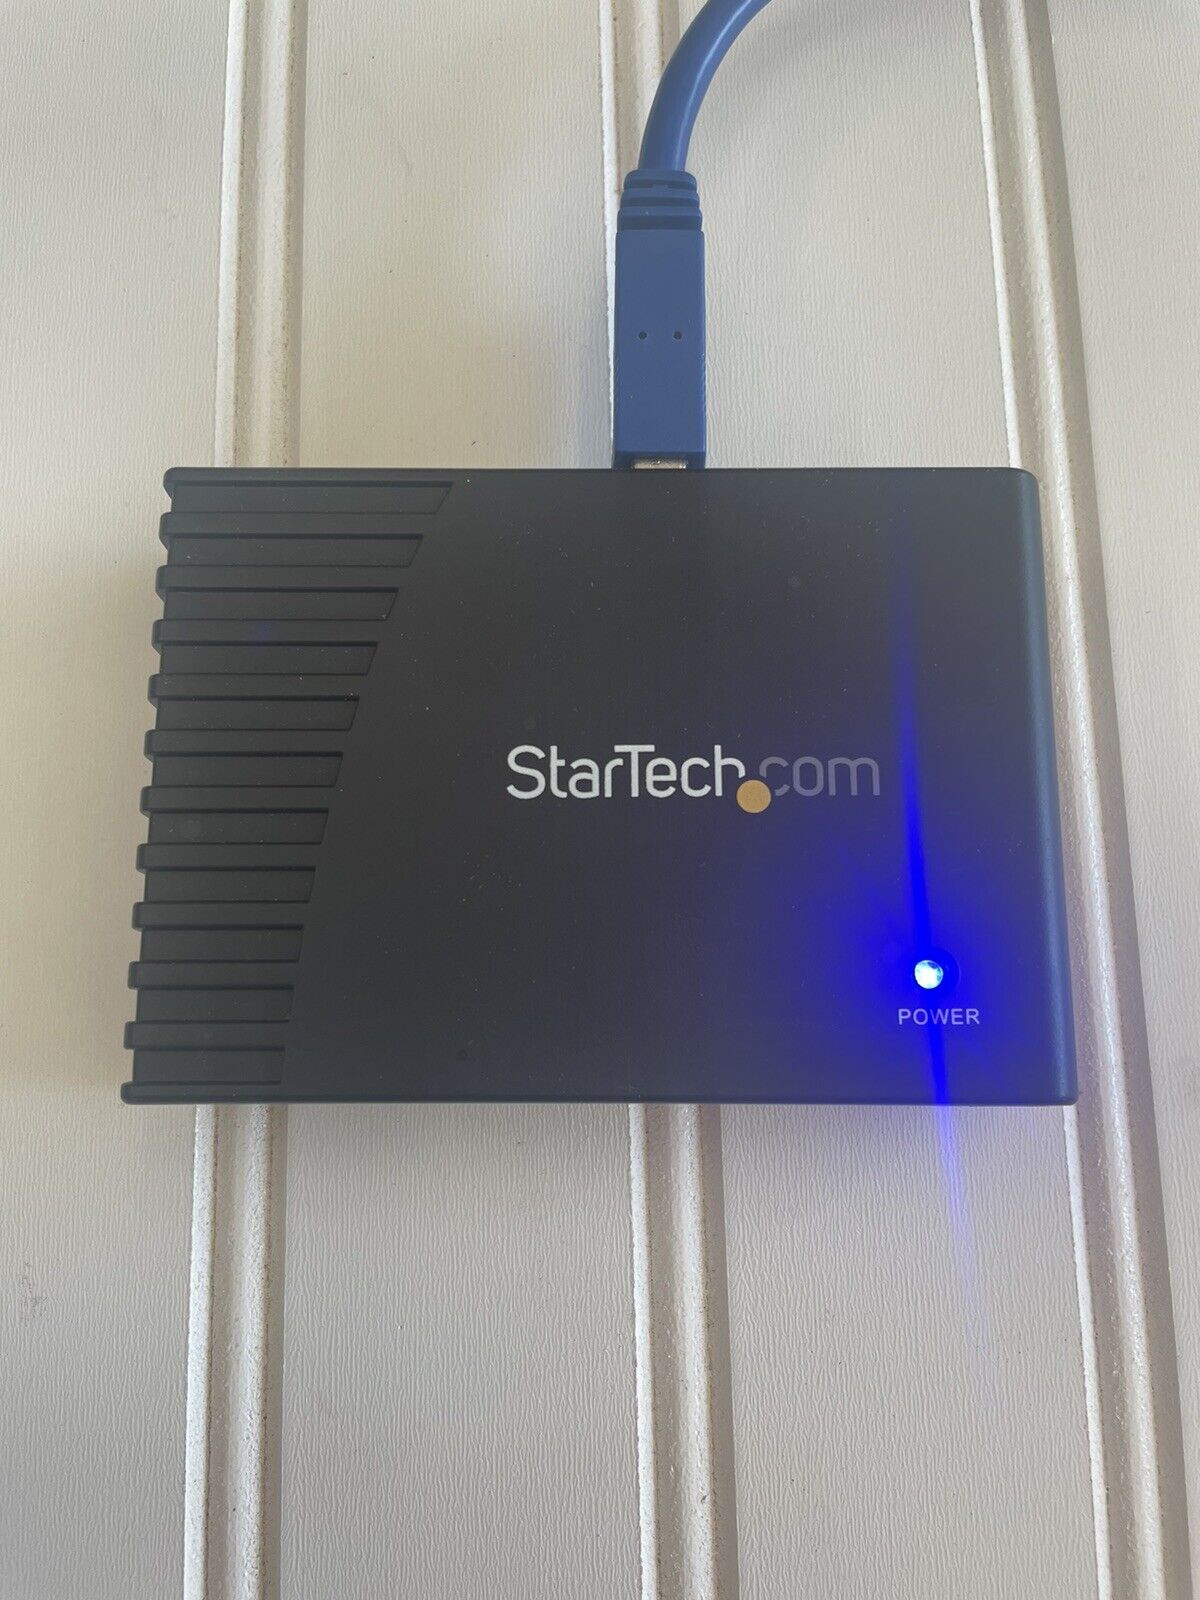 STARTECH ST4300USB3 4-PORT SUPERSPEED USB HUB 3.0 - Black